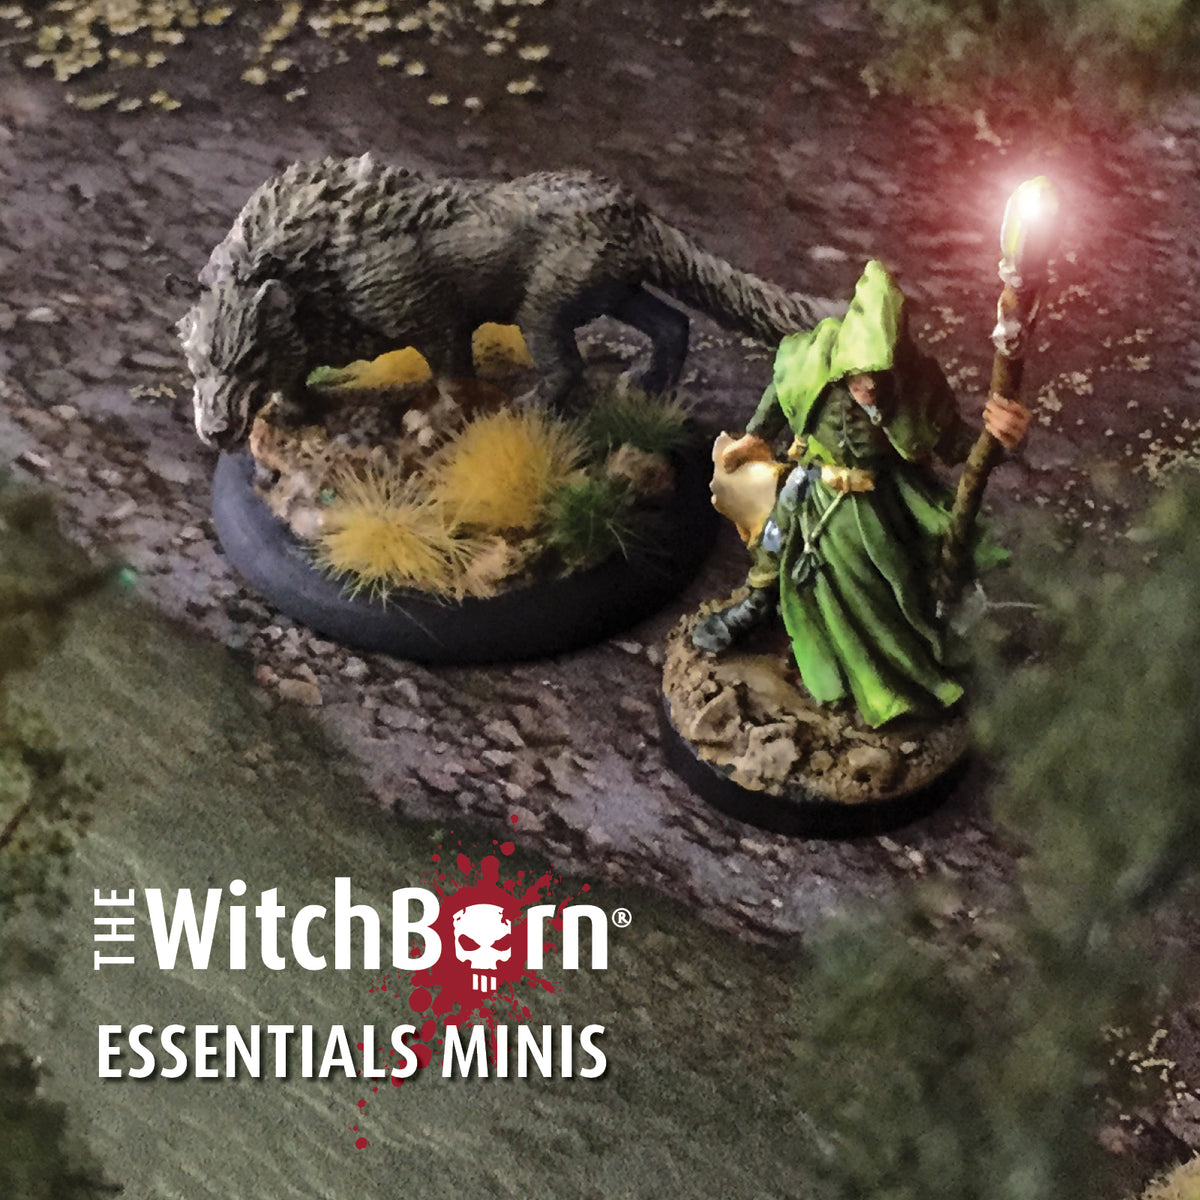 The WitchBorn® Essentials Minis